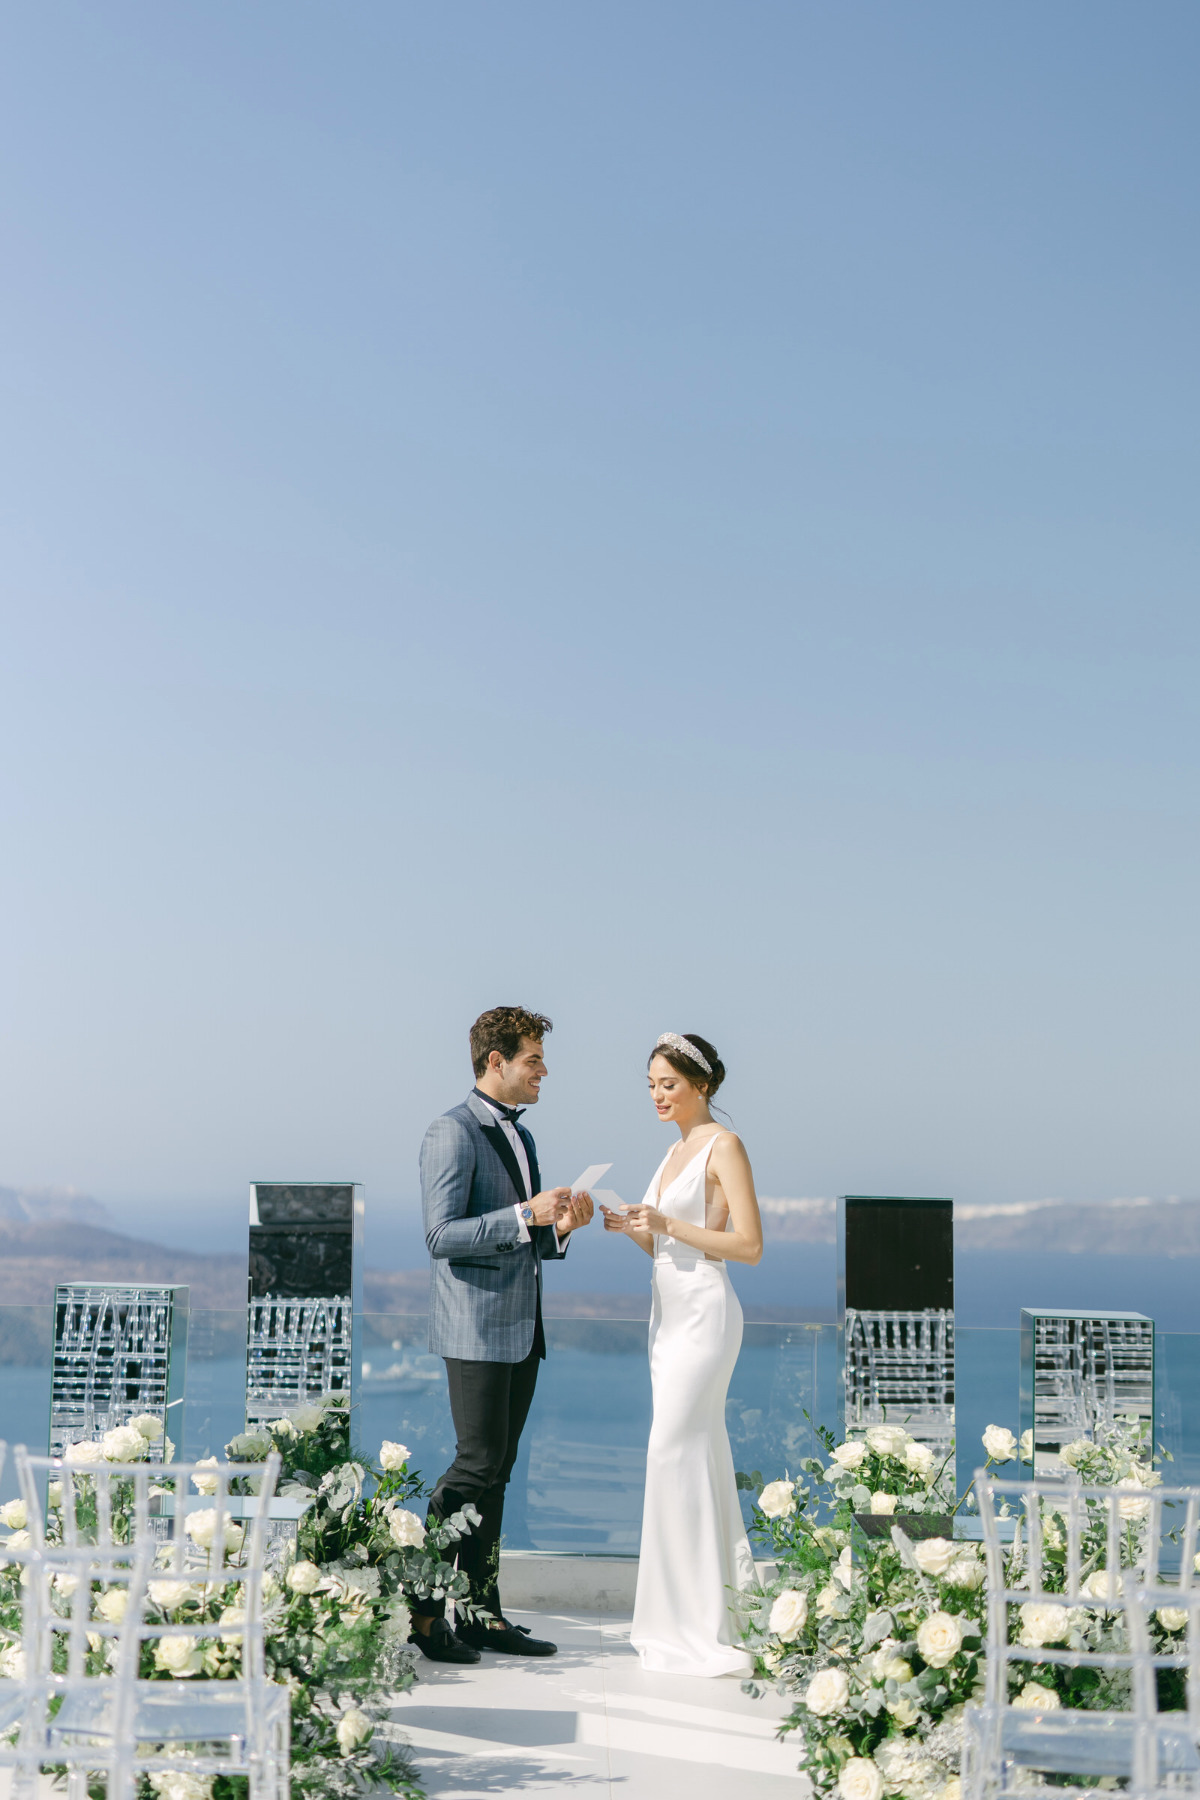 Aegean Sean wedding ceremony